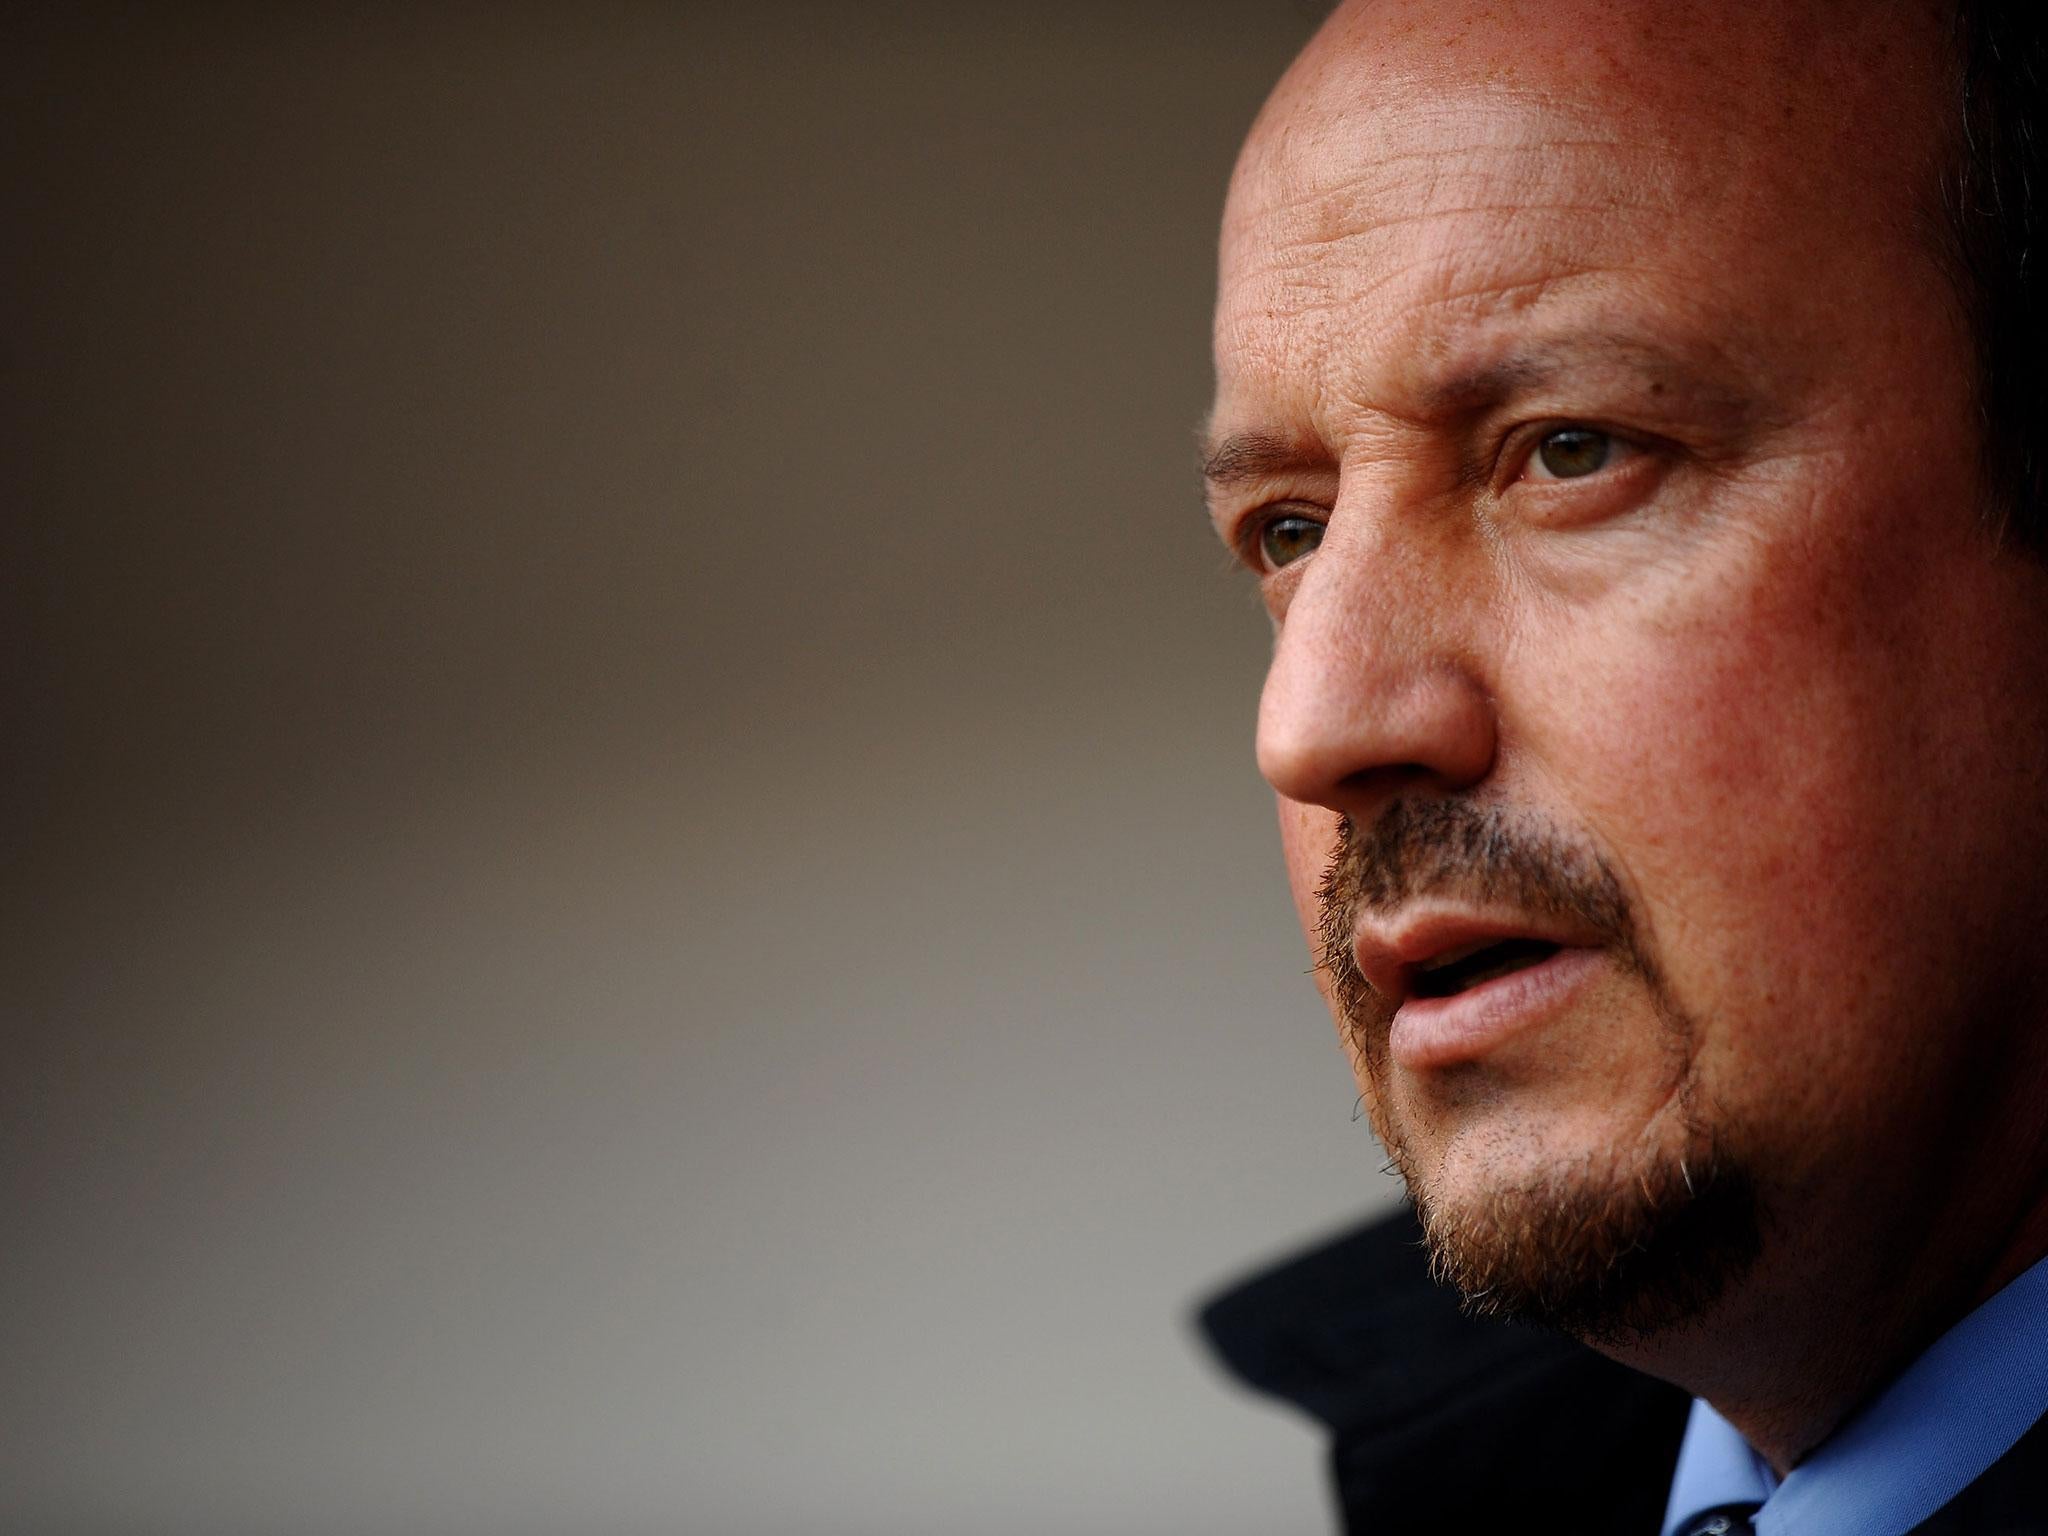 Rafa Benitez has struggled to take the club forward after clinching promotion last season